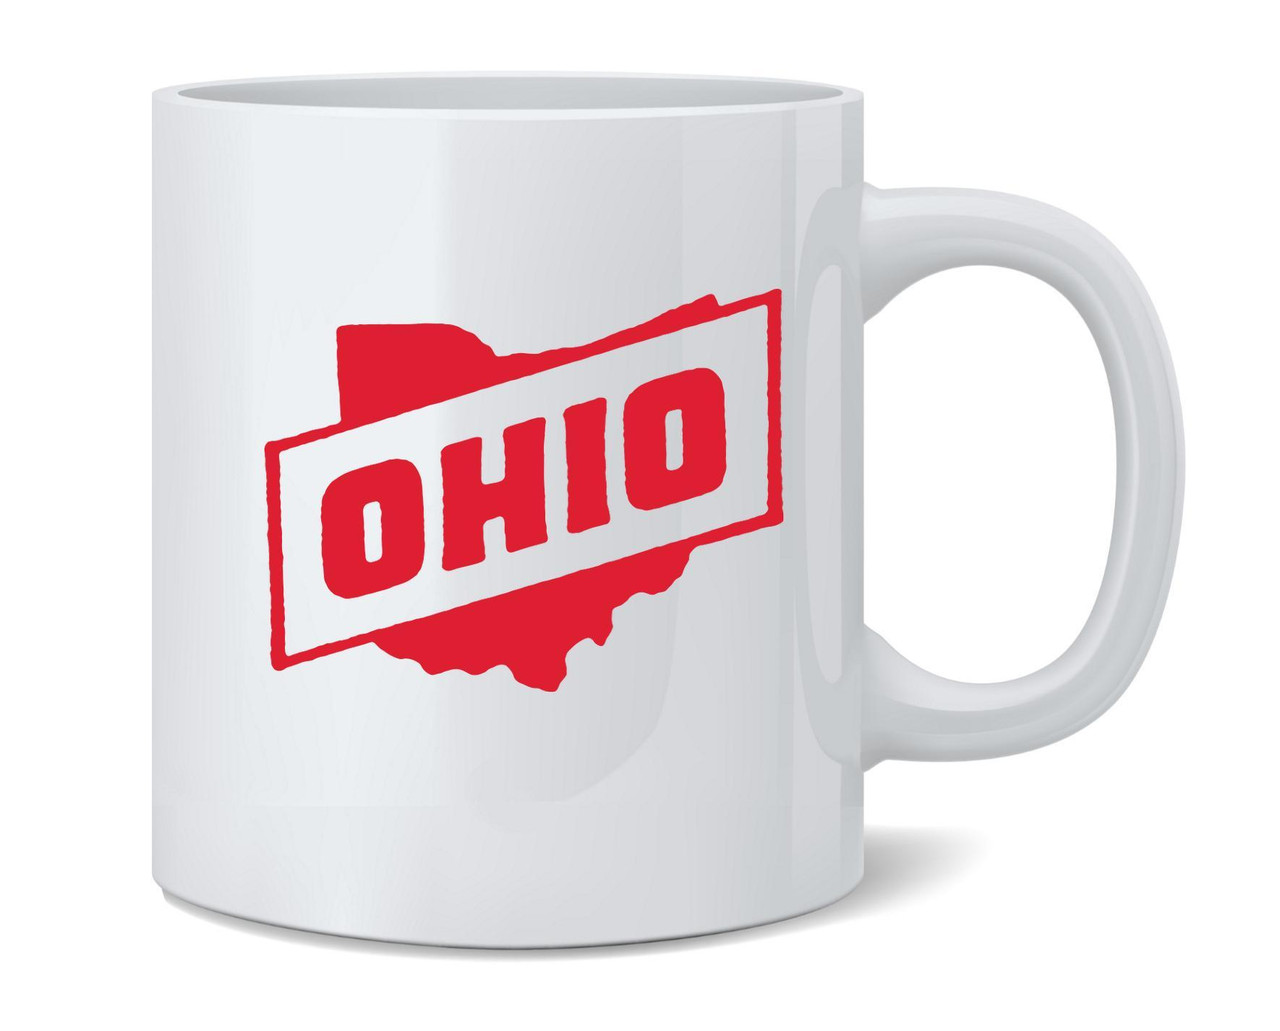 Ohio Retro Vintage State Travel Ceramic Coffee Mug Tea Cup Fun